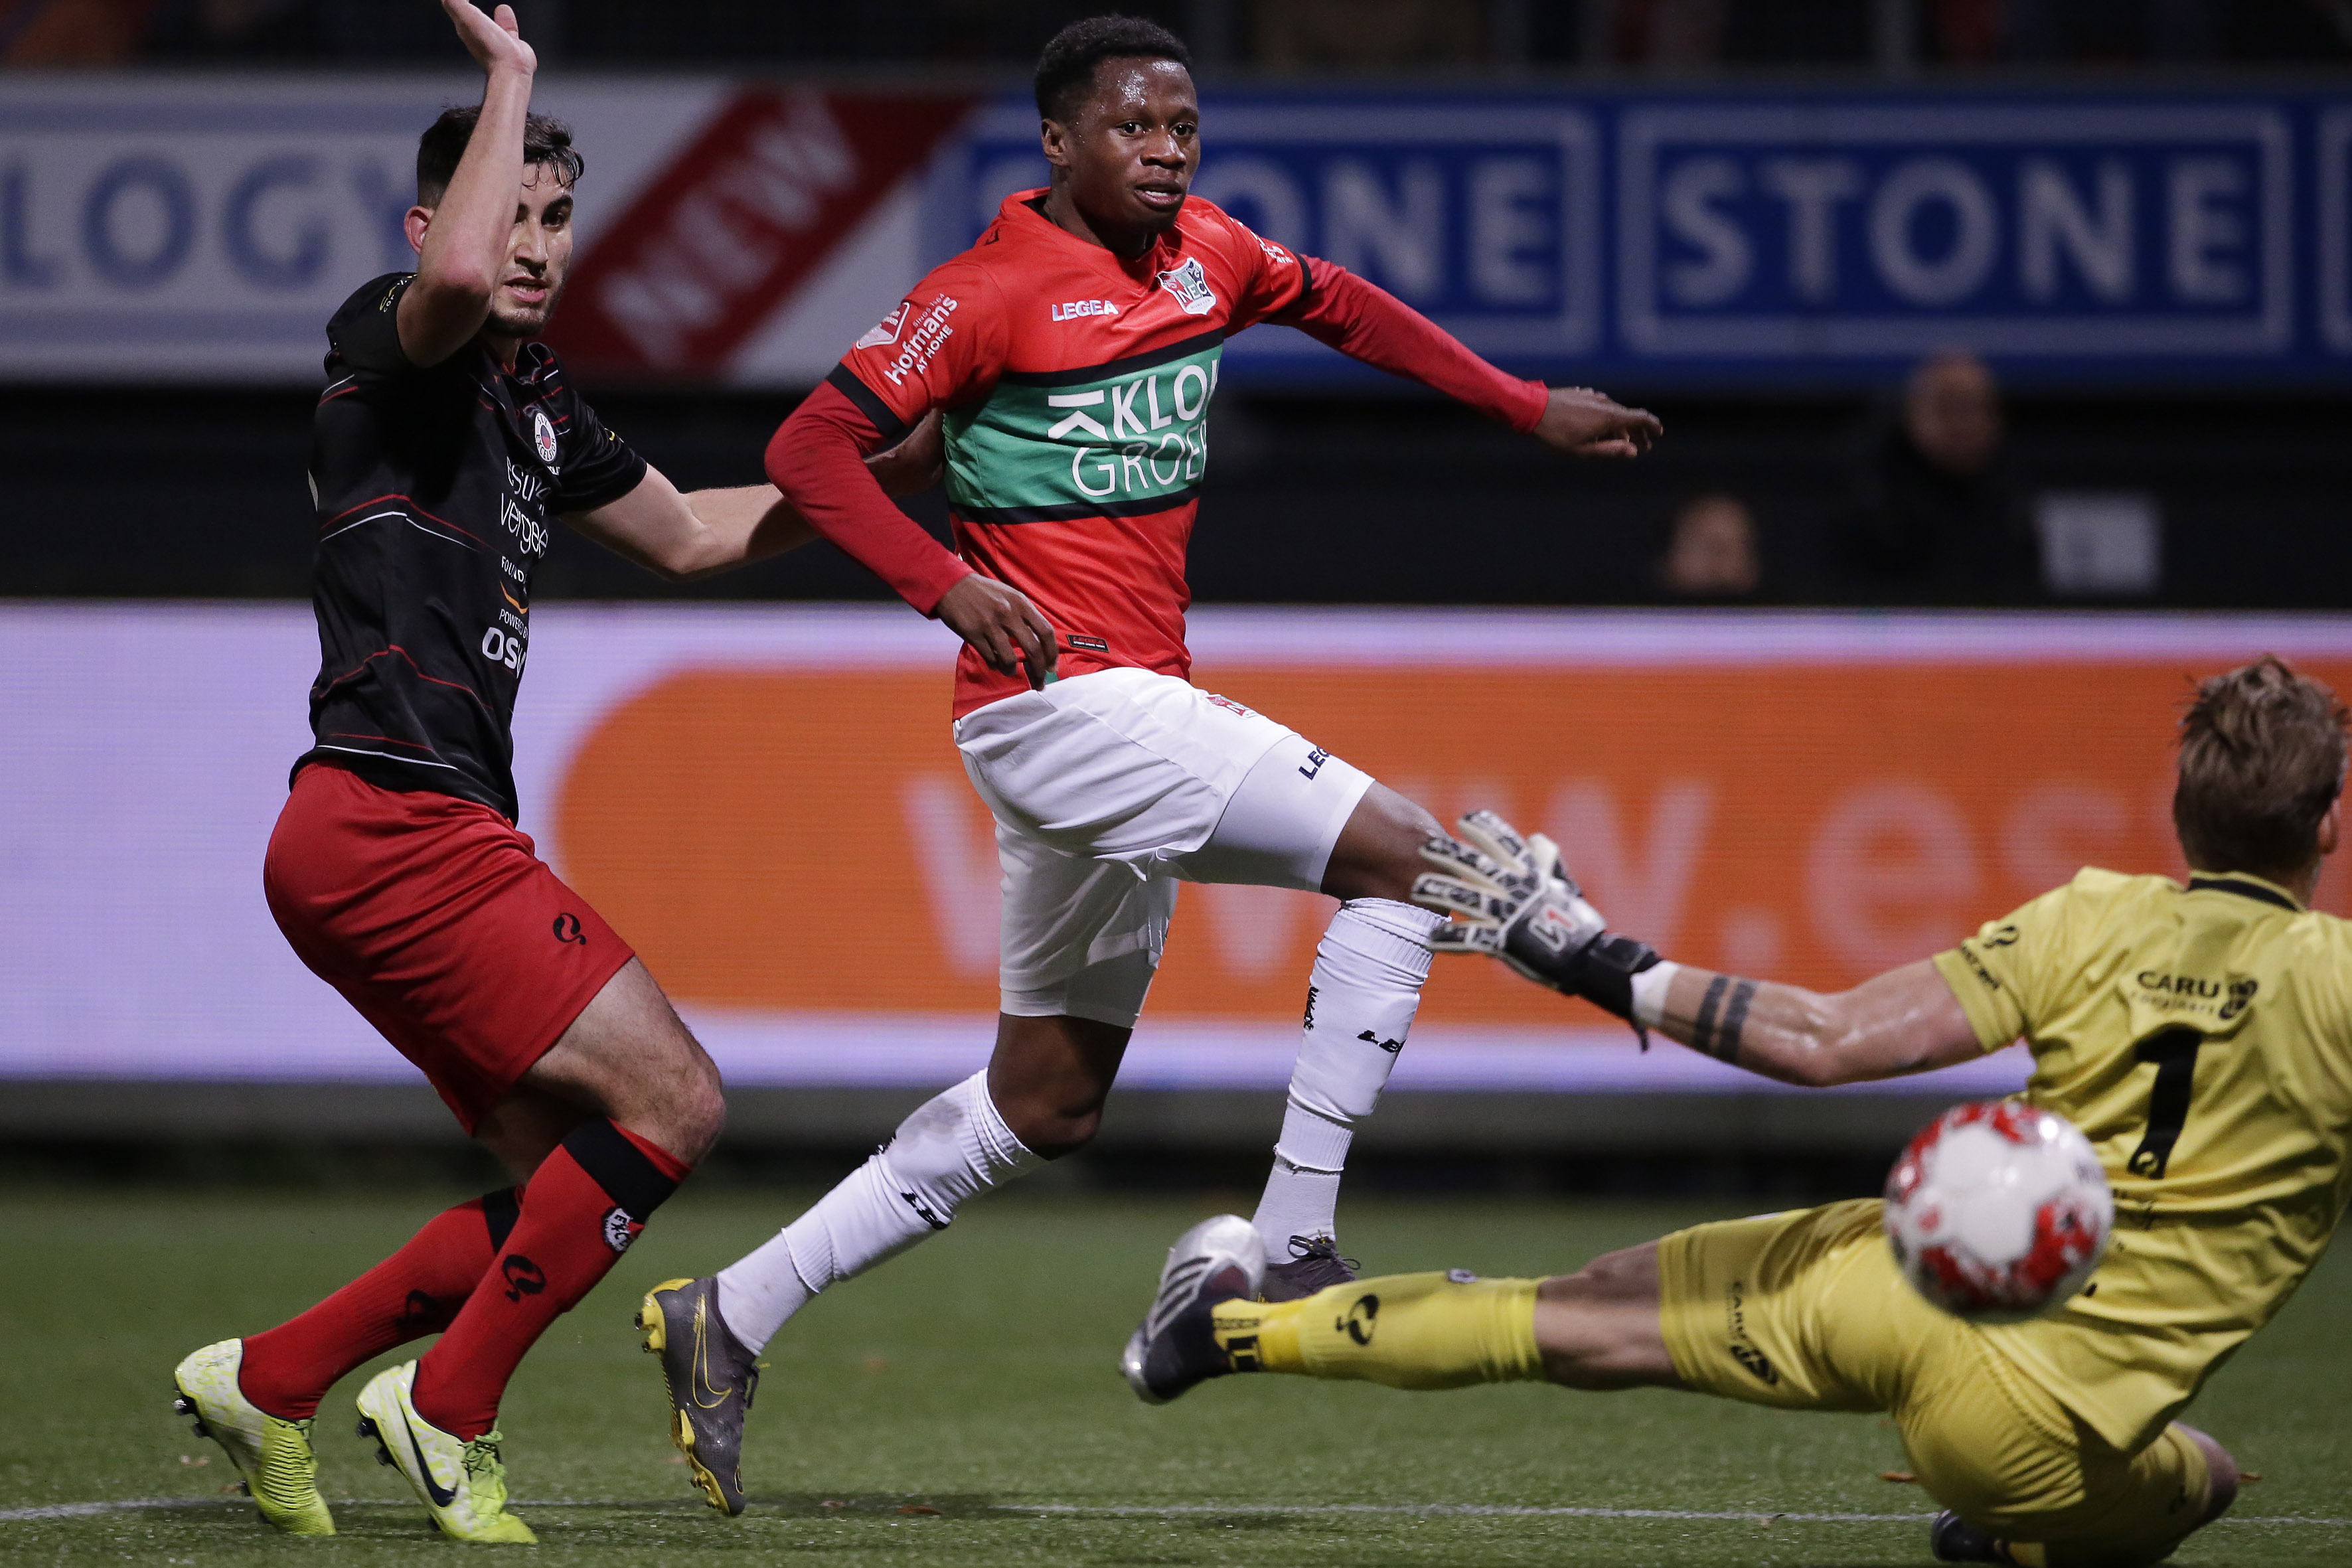 N.E.C. buigt het hoofd na 120 minuten voetbal in Rotterdam